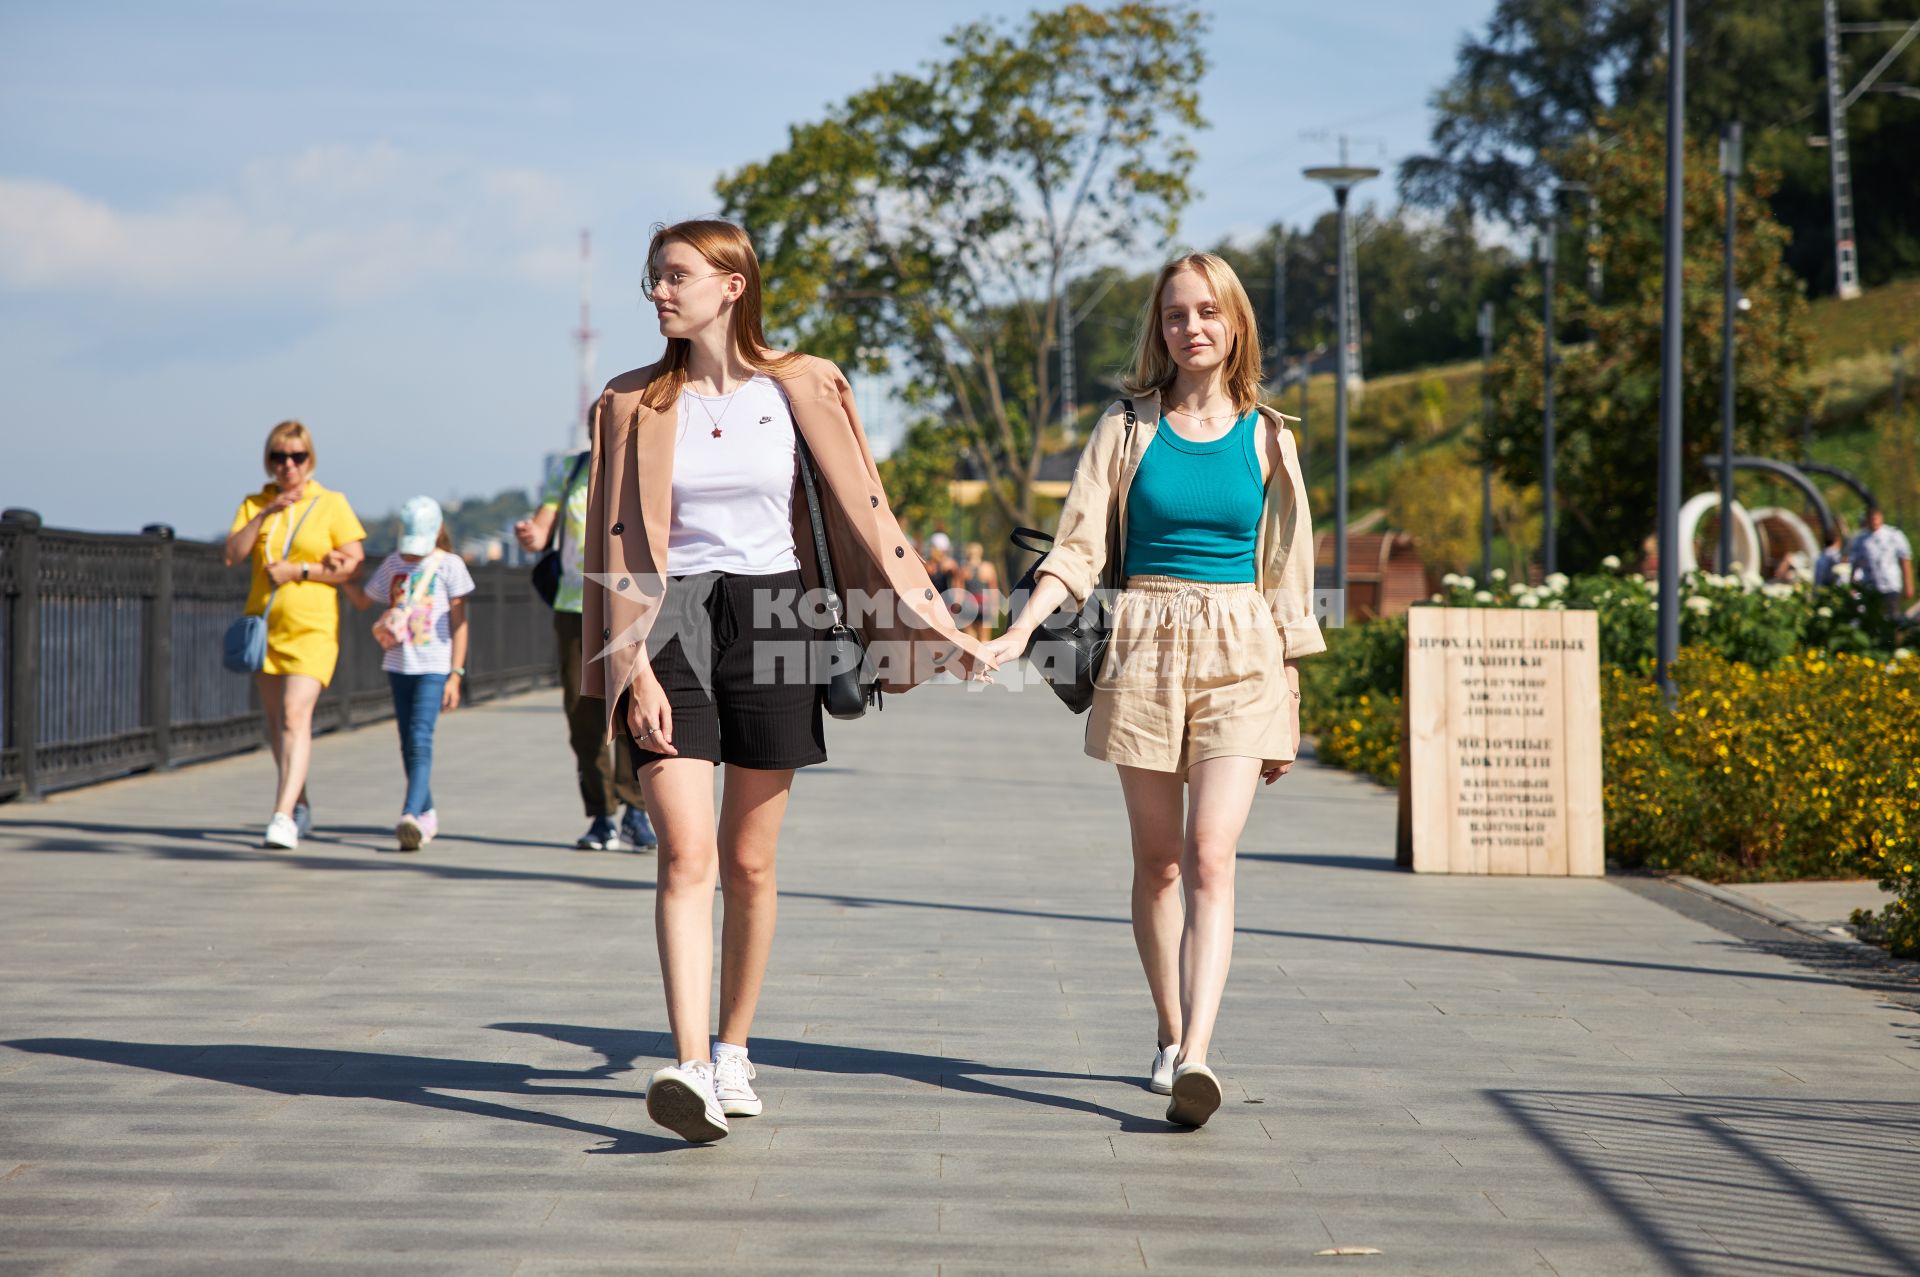 Пермь. Девушки взявшись за руки гуляют по улице.